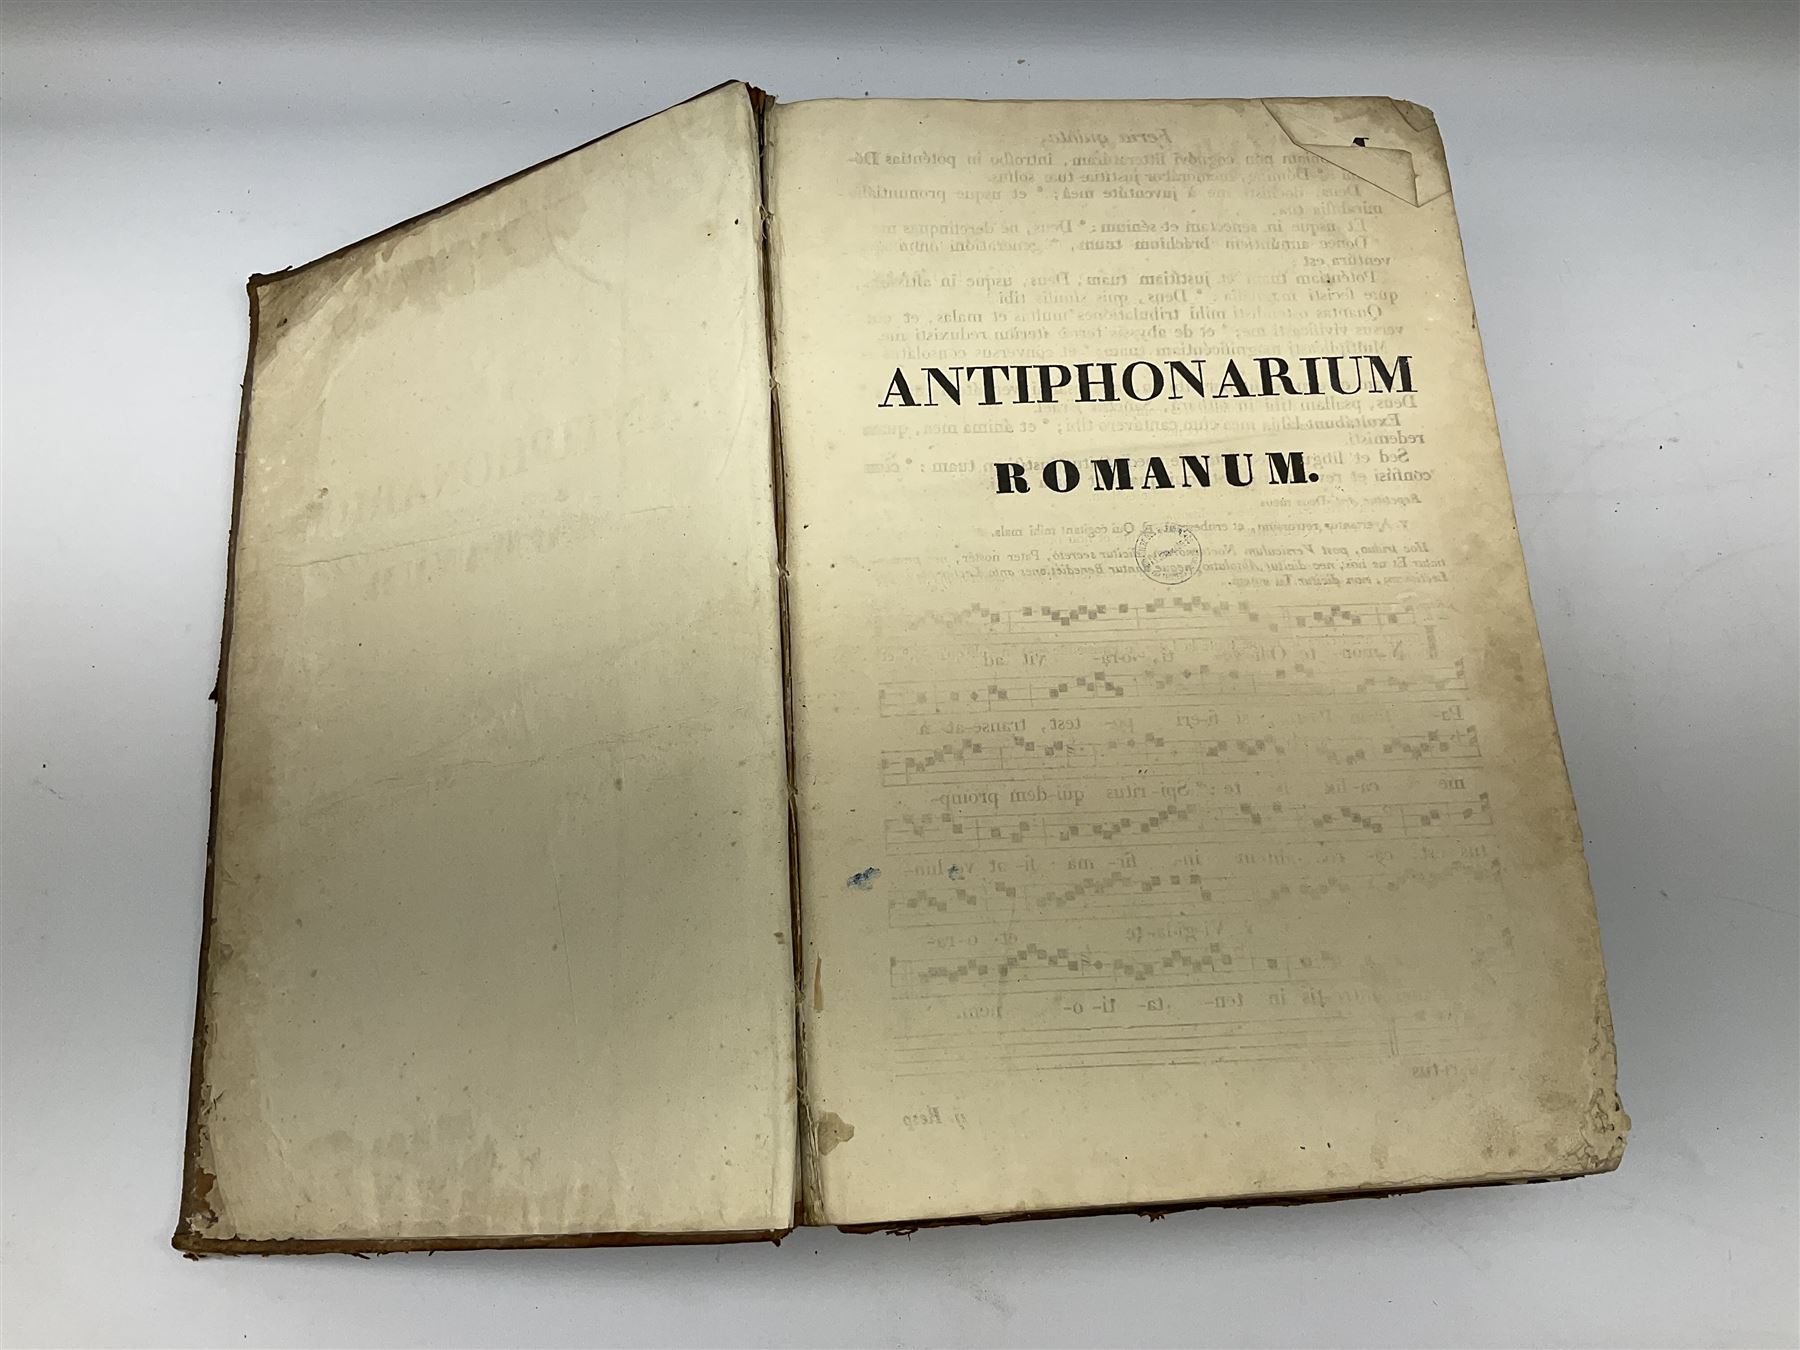 Six 19th century leather bound books of music comprising Graduale Juxta Missale Romanum and Antiphon - Image 5 of 21